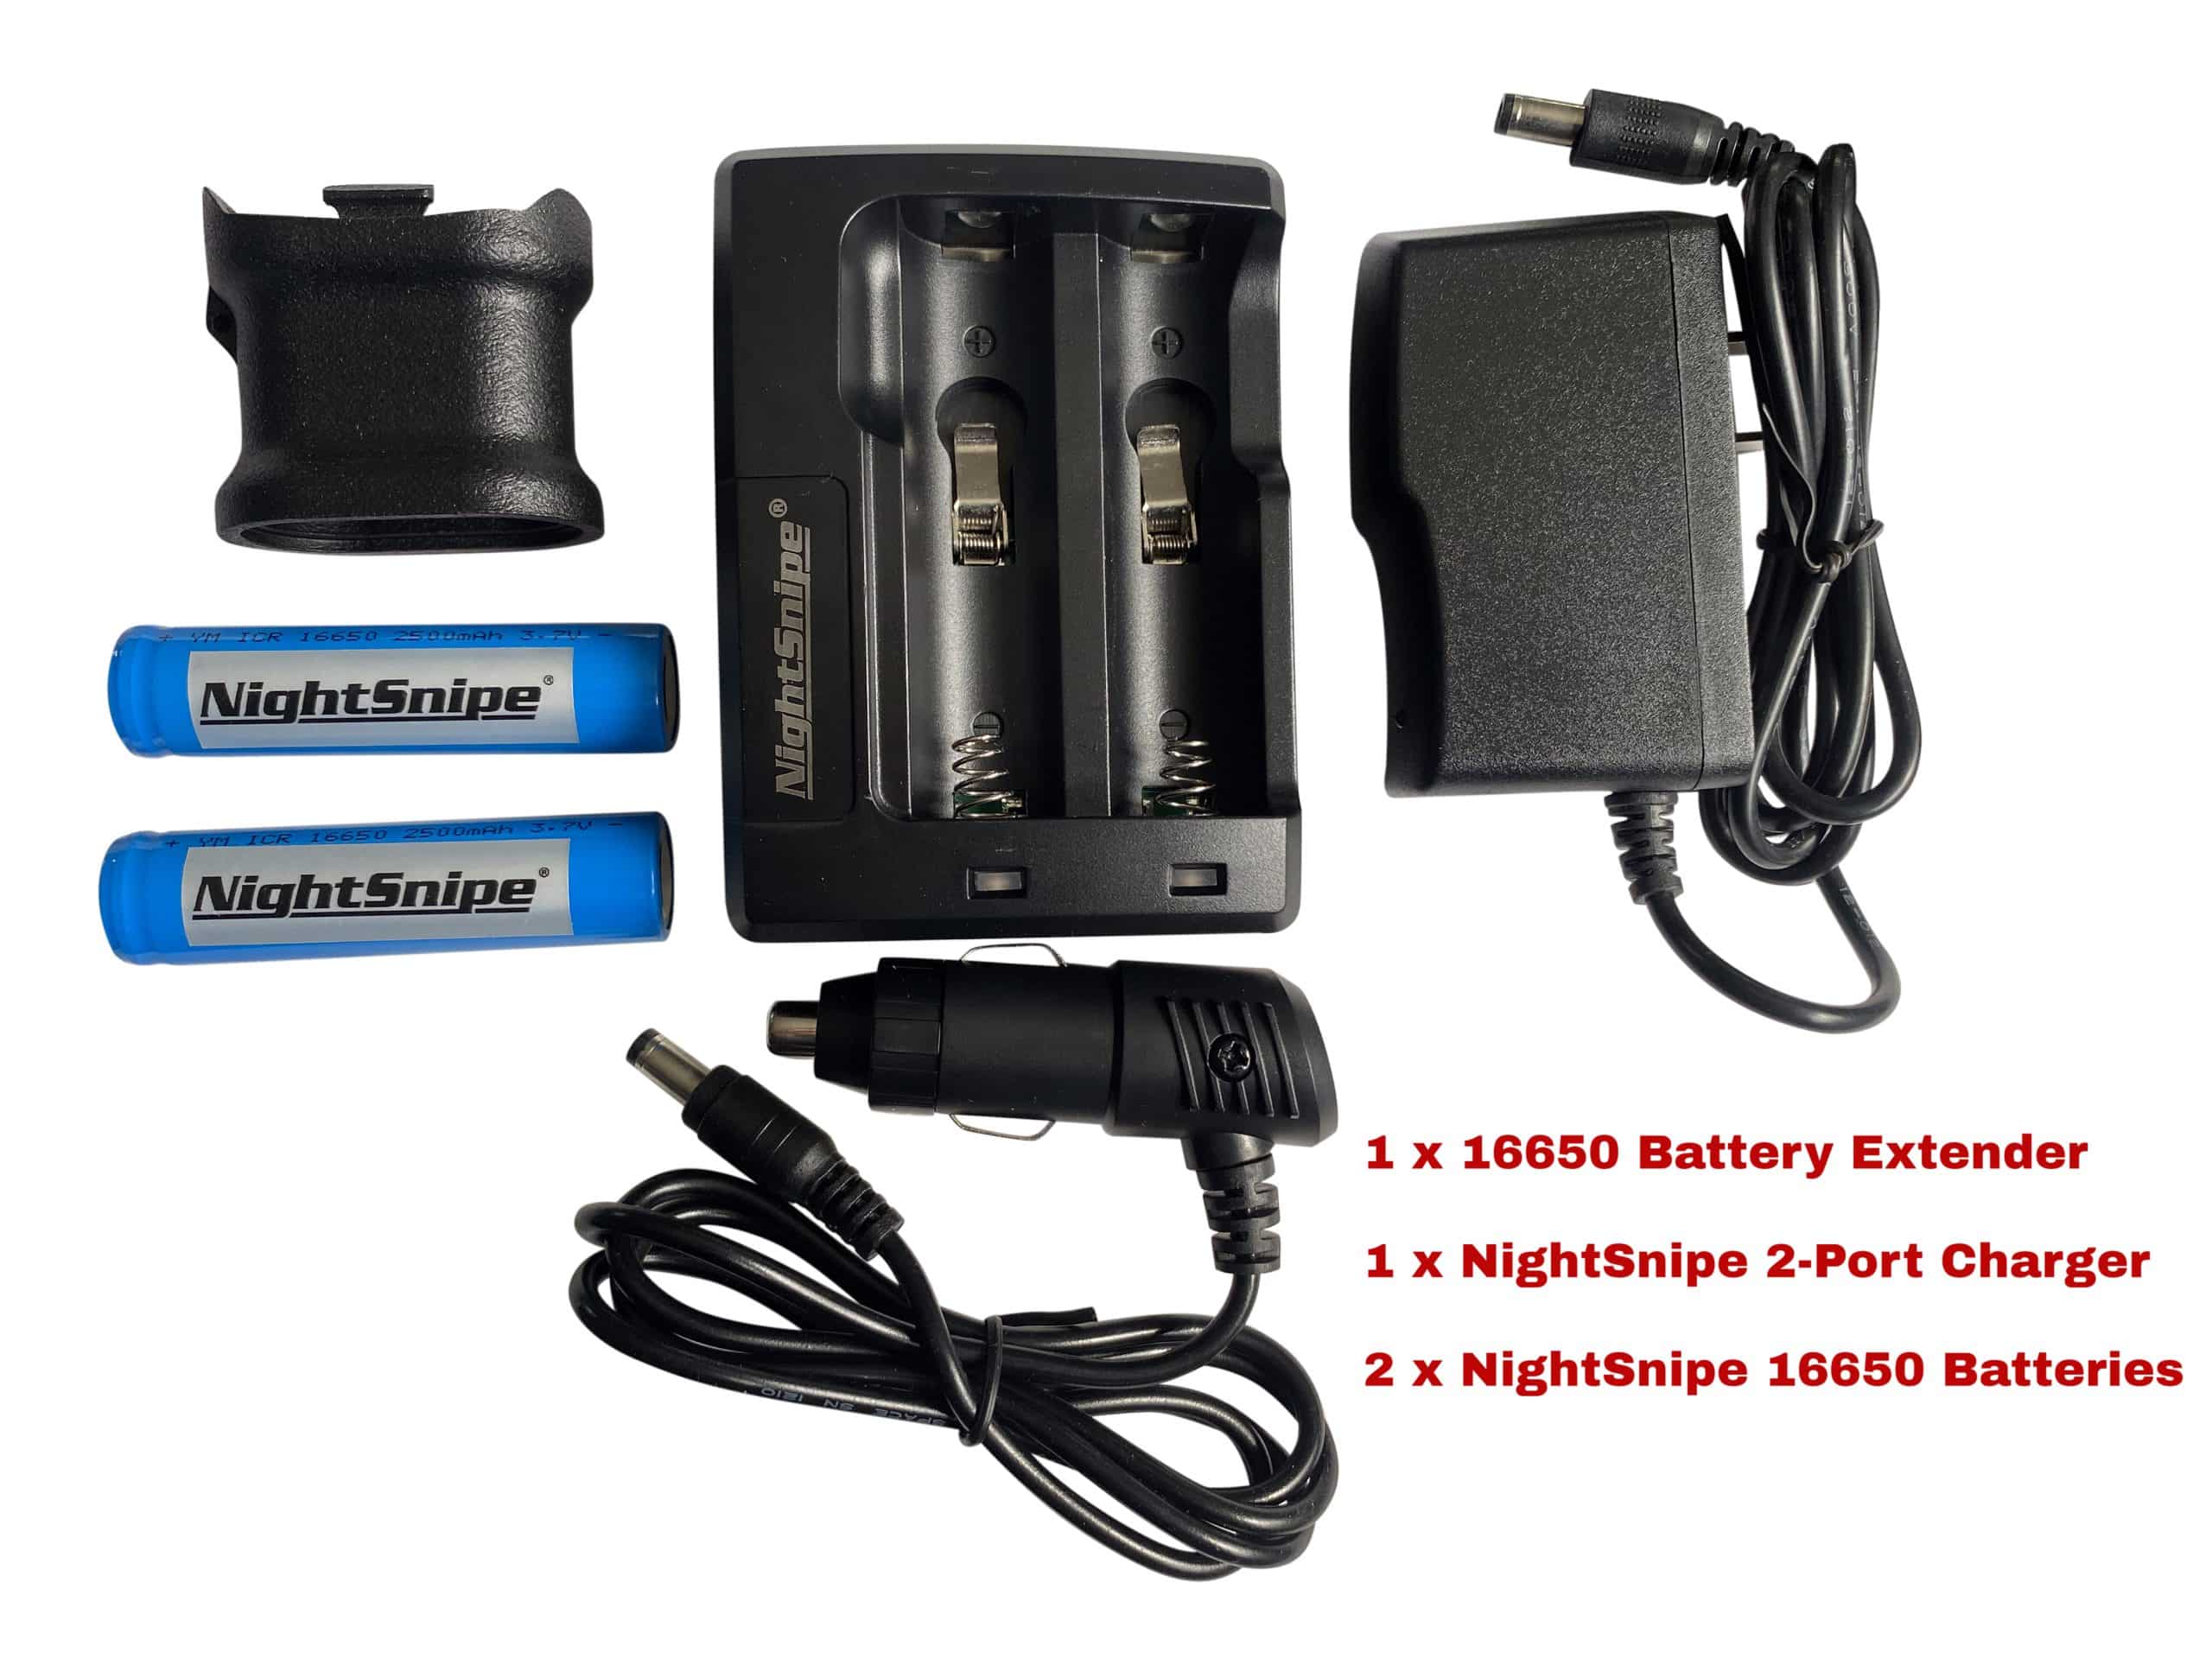 18650 Li-ion 2500mAh Rechargeable Battery Copy